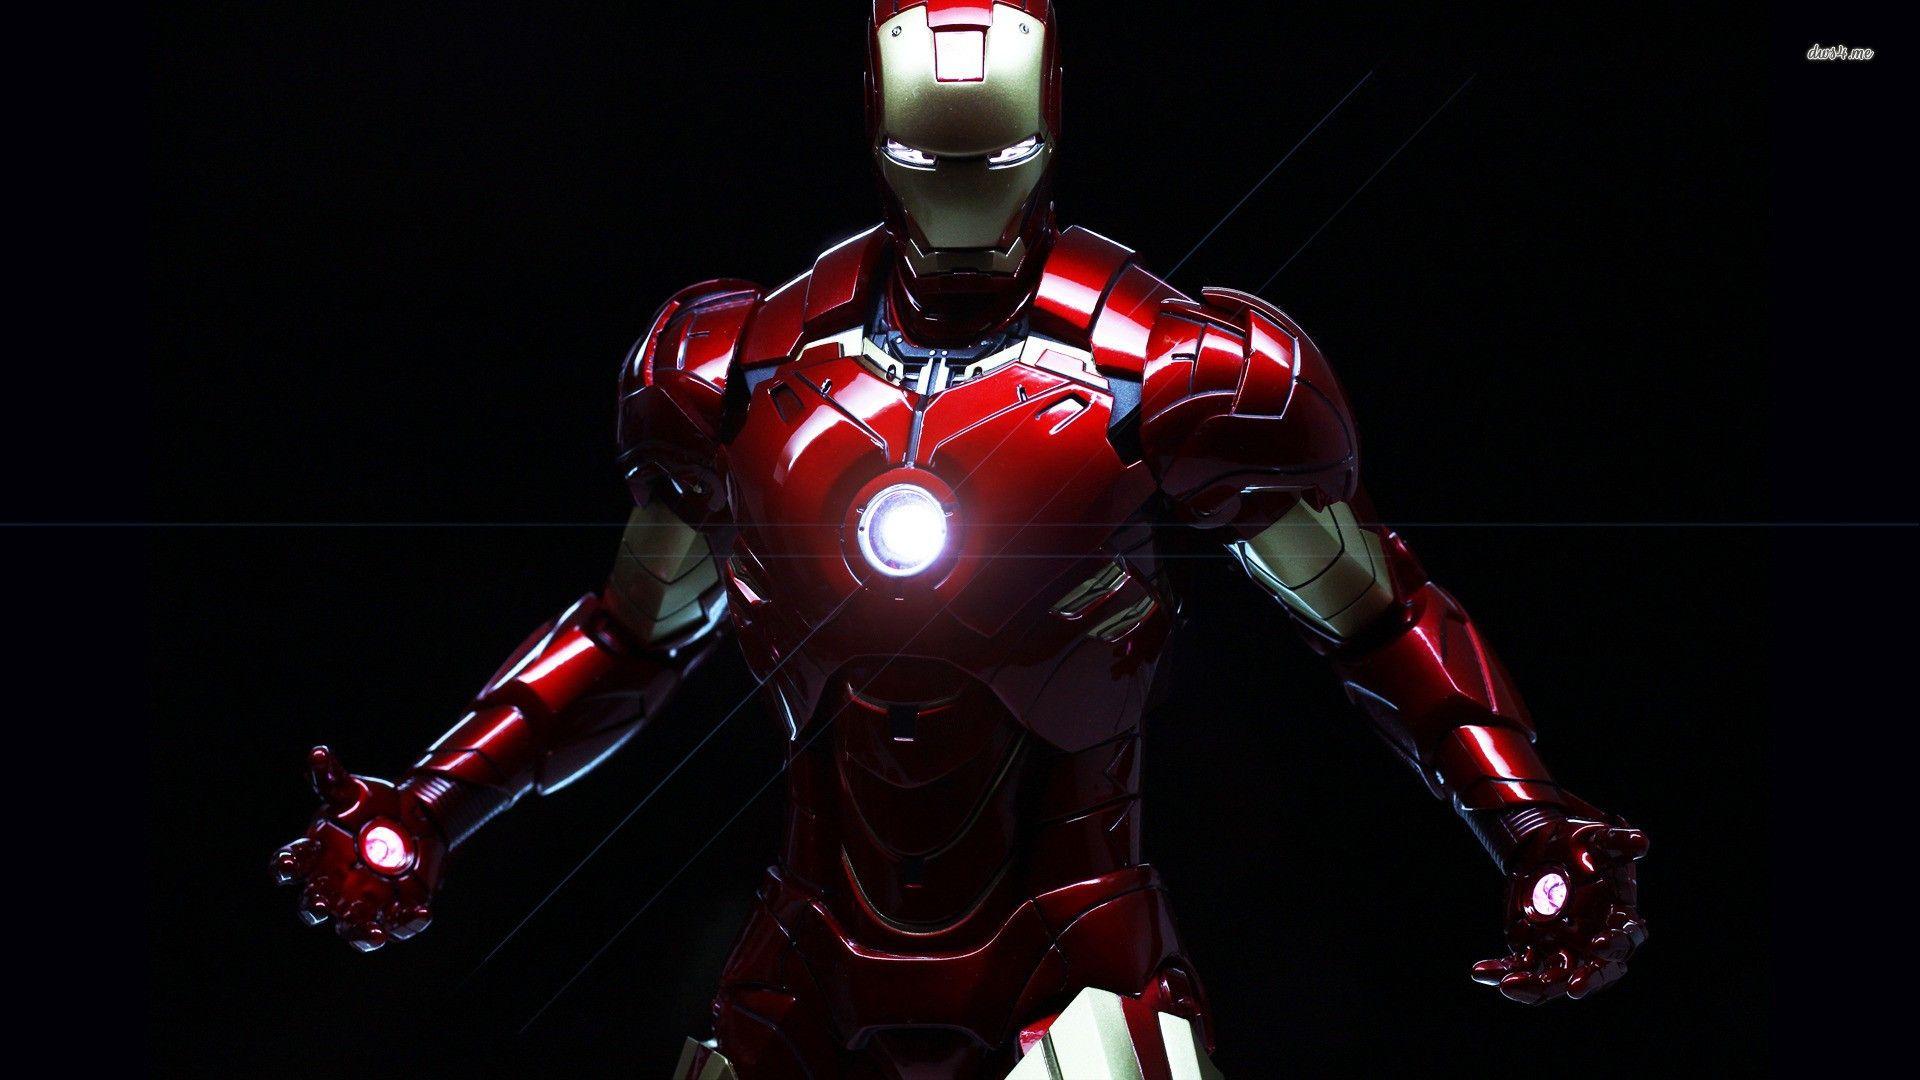 122123 3D Mark VII 4K Iron Man  Rare Gallery HD Wallpapers